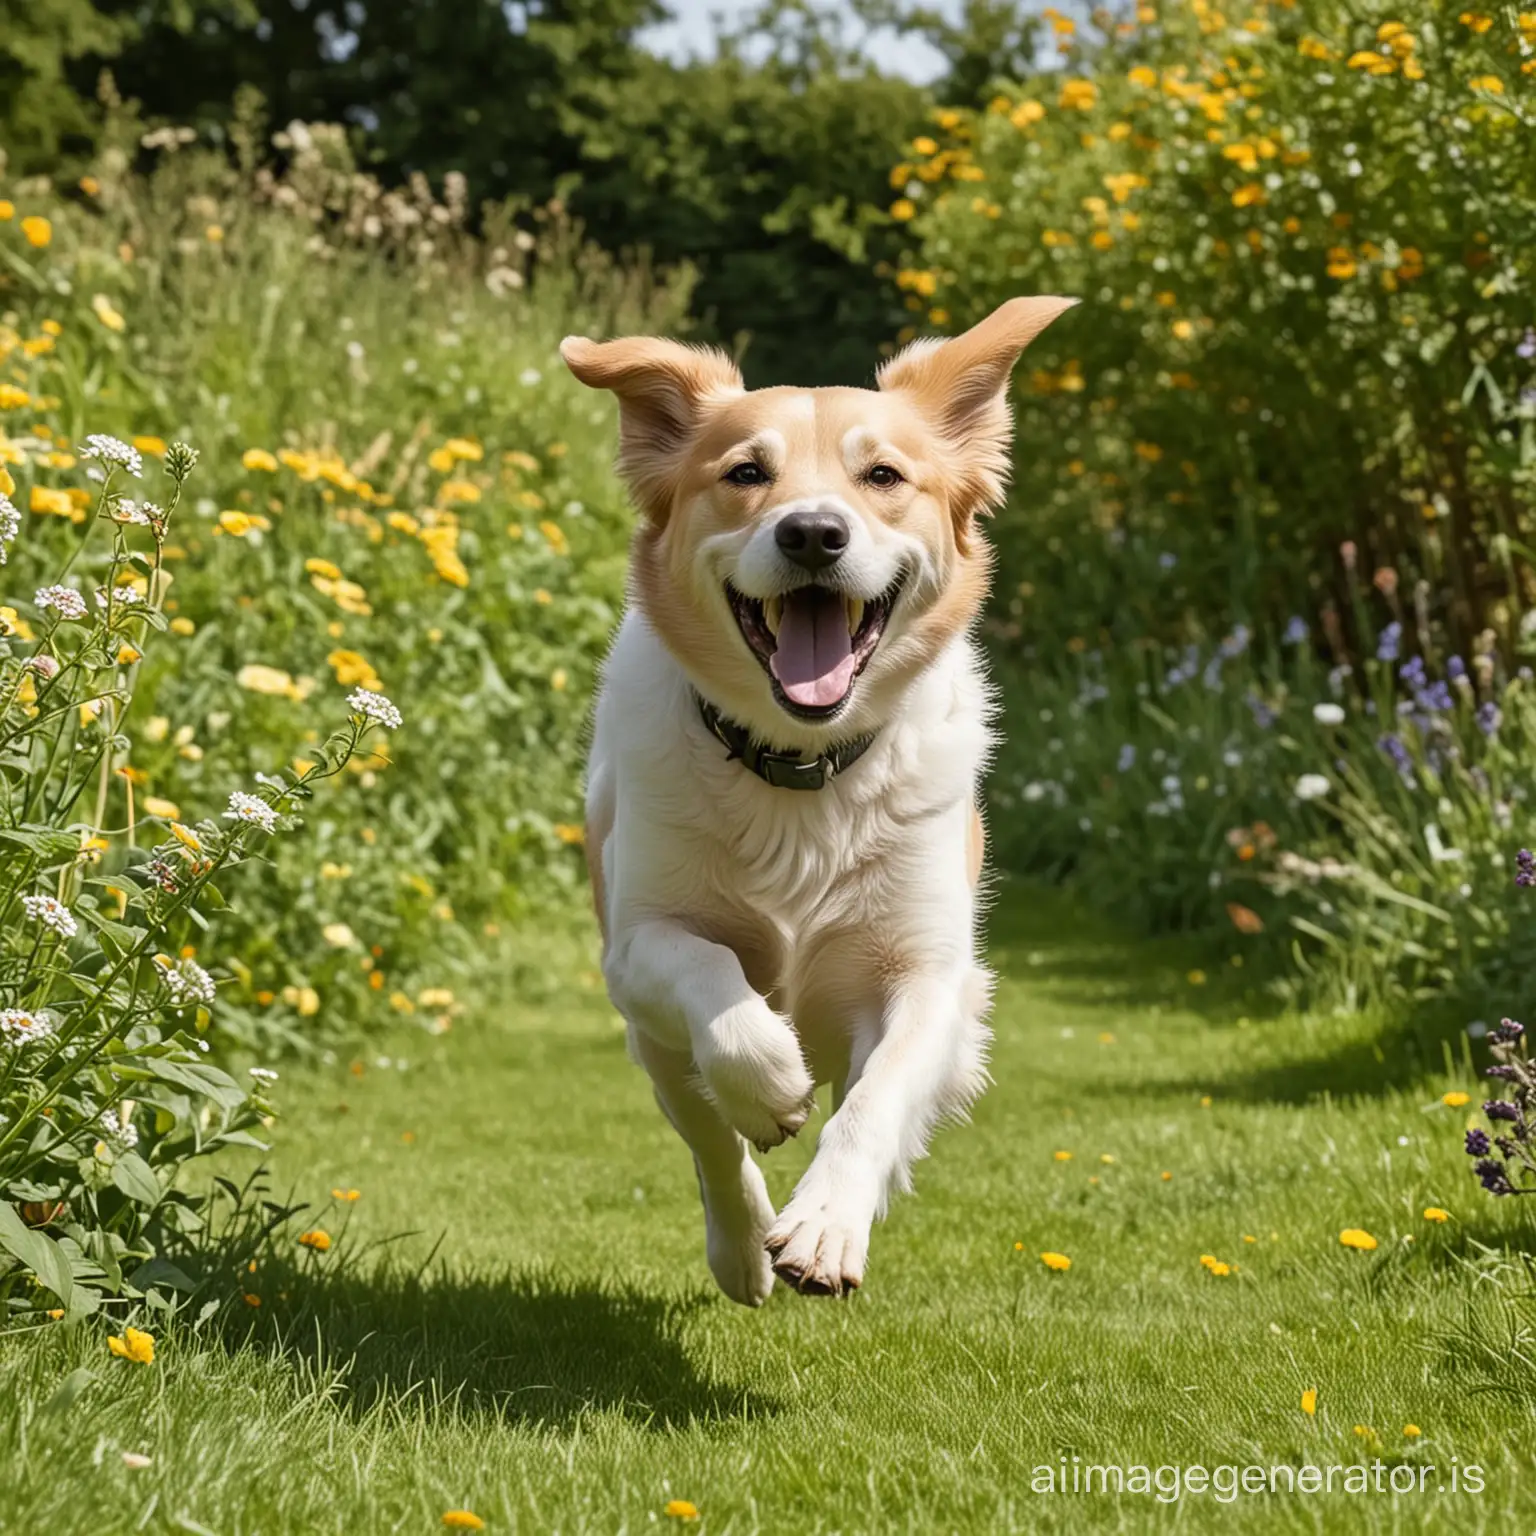 Energetic-Dog-Enjoying-Playtime-in-Vibrant-Garden-Setting